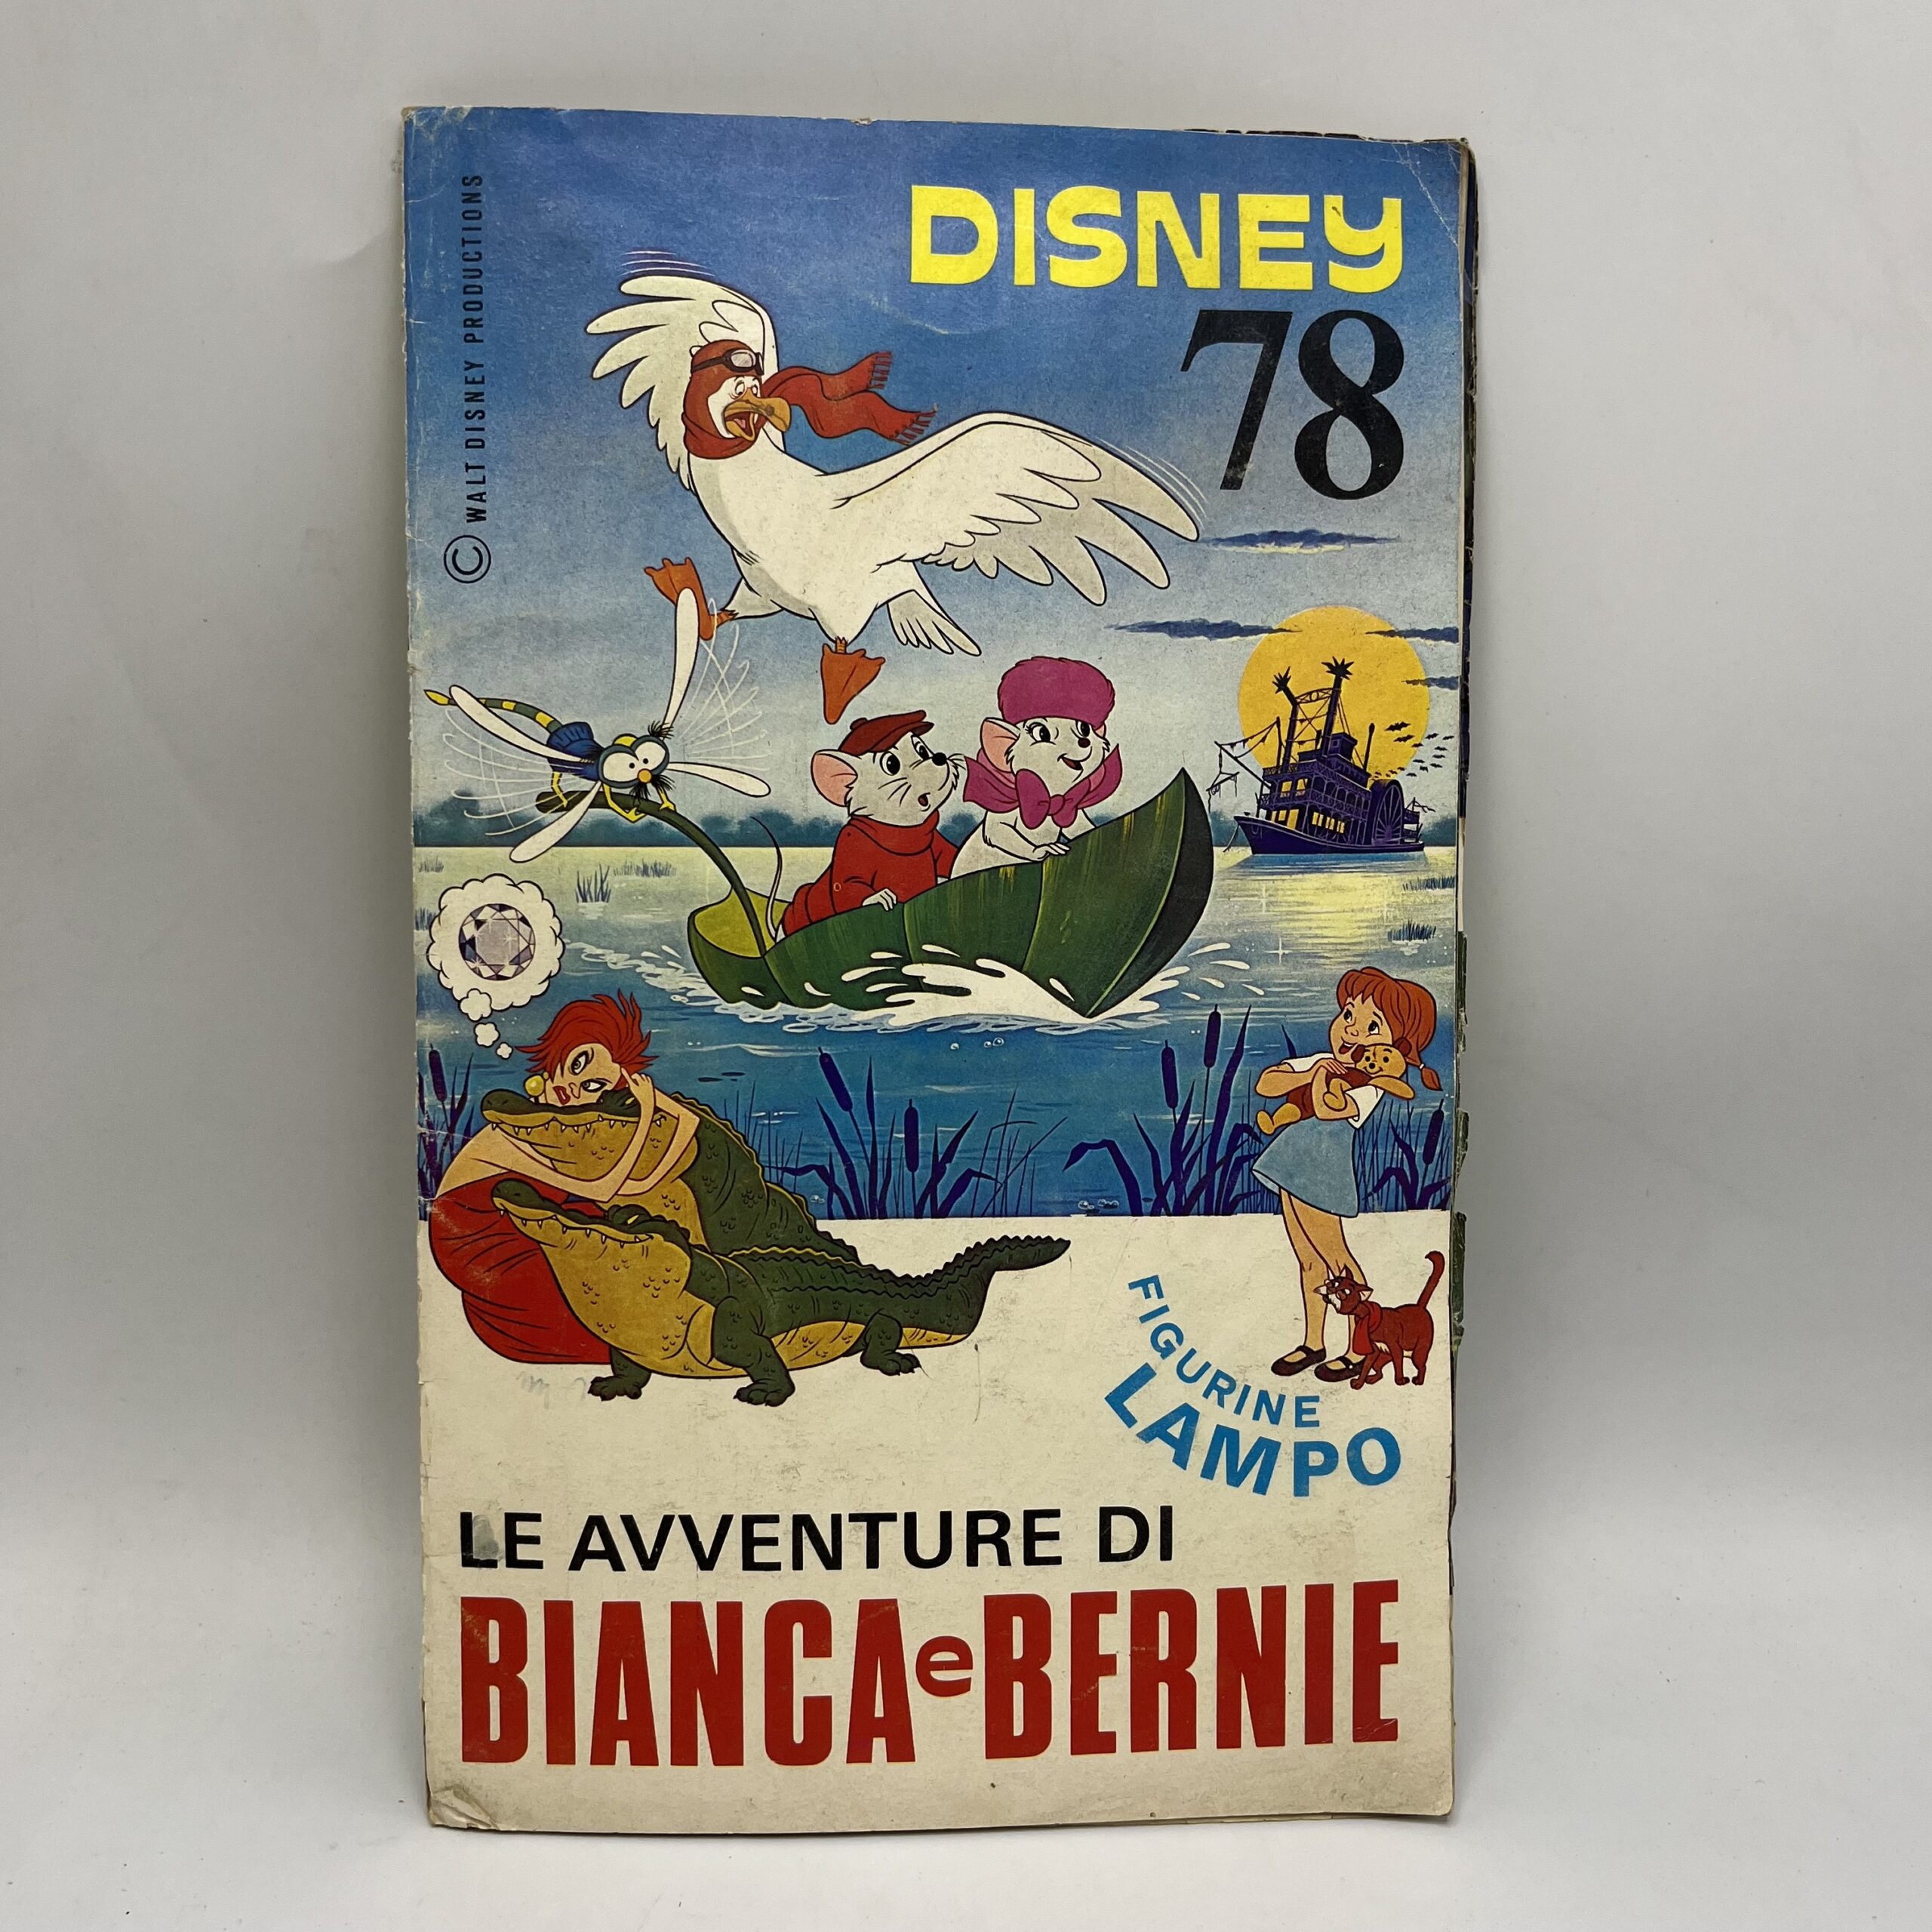 Disney sticker album "The Adventures of Bianca and Bernie" Lampo 1978 incomplete